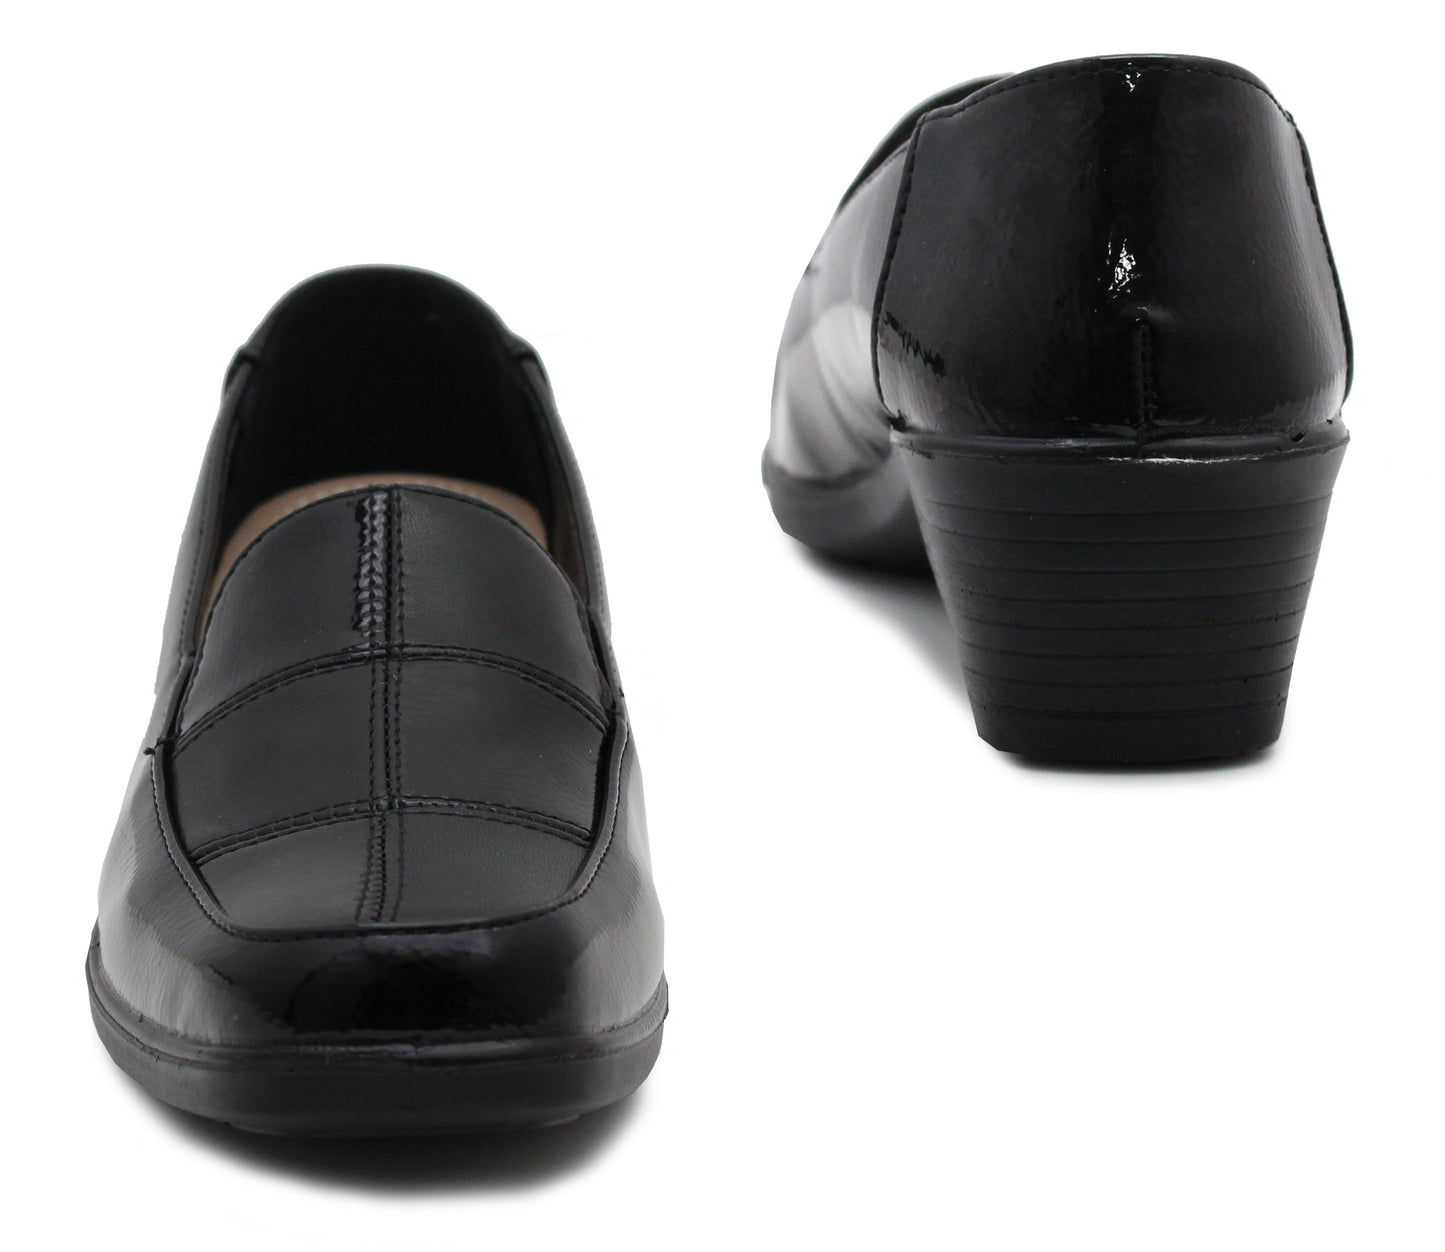 Womens Block Heel Court Shoe Pumps Ladies Patent Smart Slip On Low Heel Office Formal Loafer Shoes